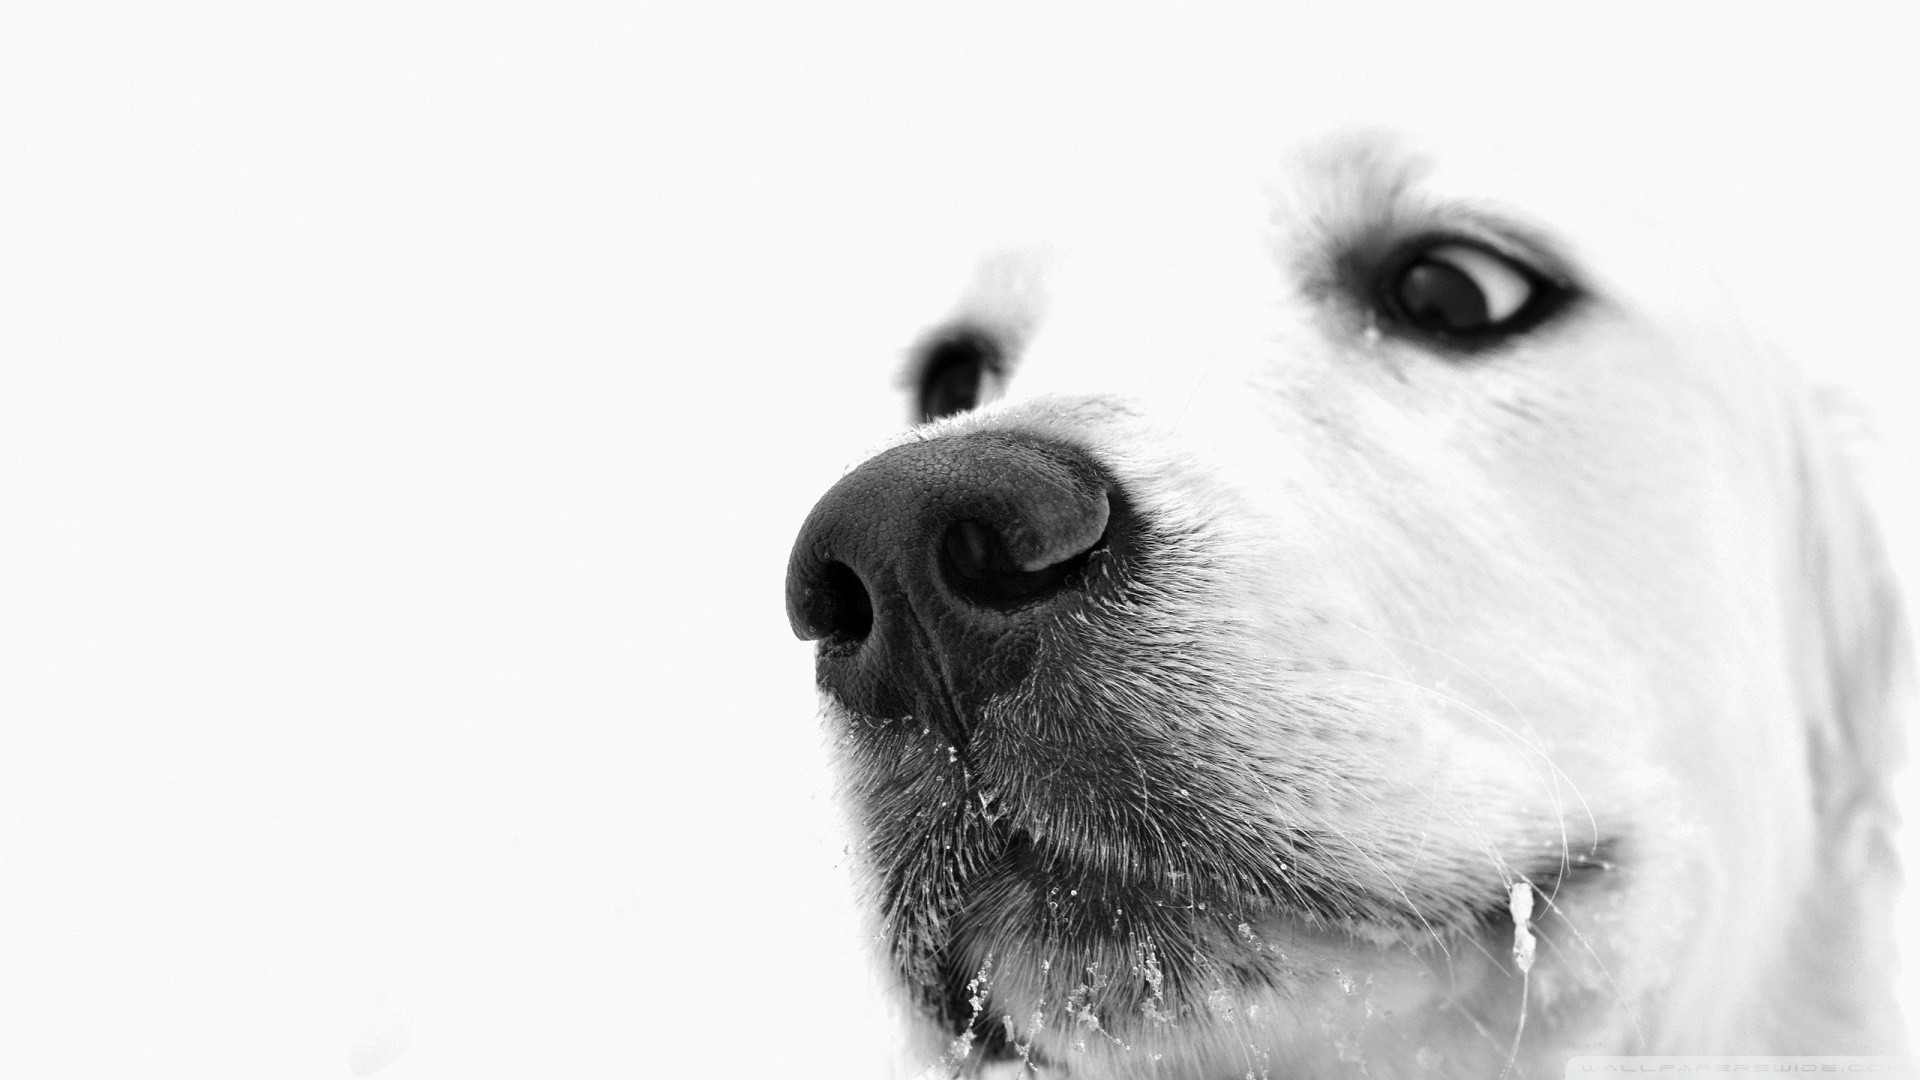 1920x1080 Black And White Sad Dog Wallpaper Download Dog wallpapers, HD puppy  wallpaper, Free dog